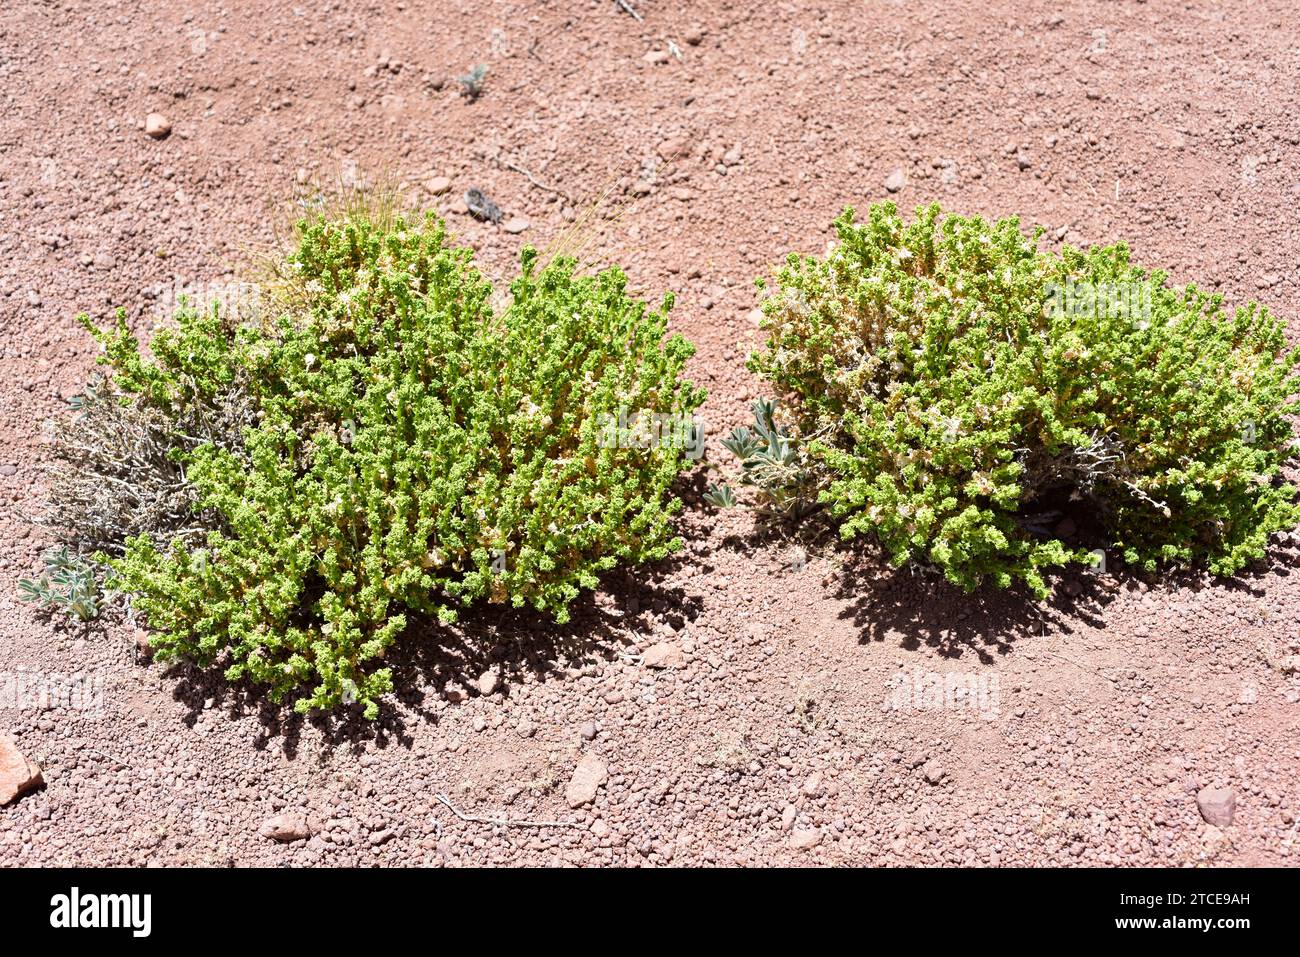 Bailahuen (Haplopappus baylahuen) is a medicinal shrub native to northern Chile. This photo was taken in Atacama Desert. Stock Photo